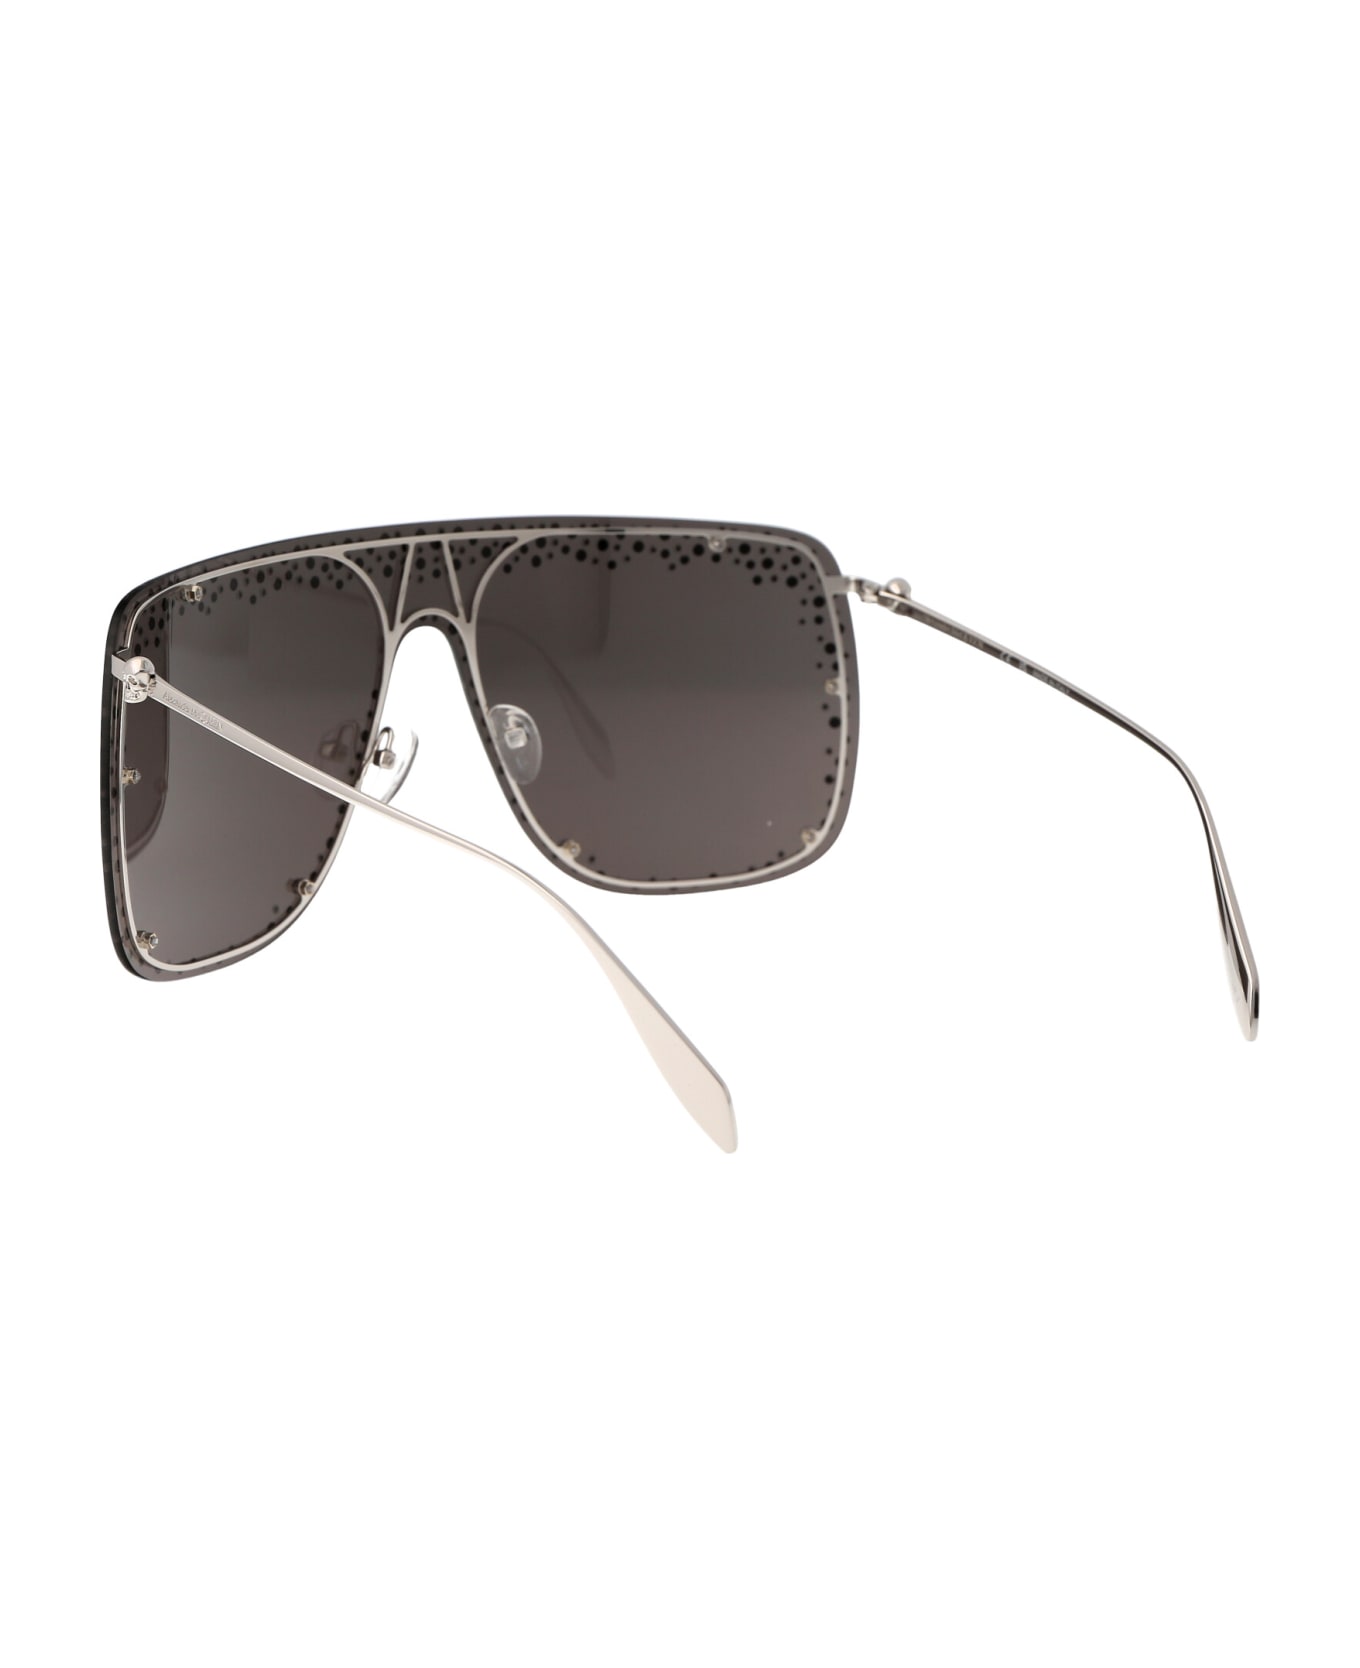 Alexander McQueen Eyewear Am0313s Sunglasses - 012 SILVER SILVER GREY